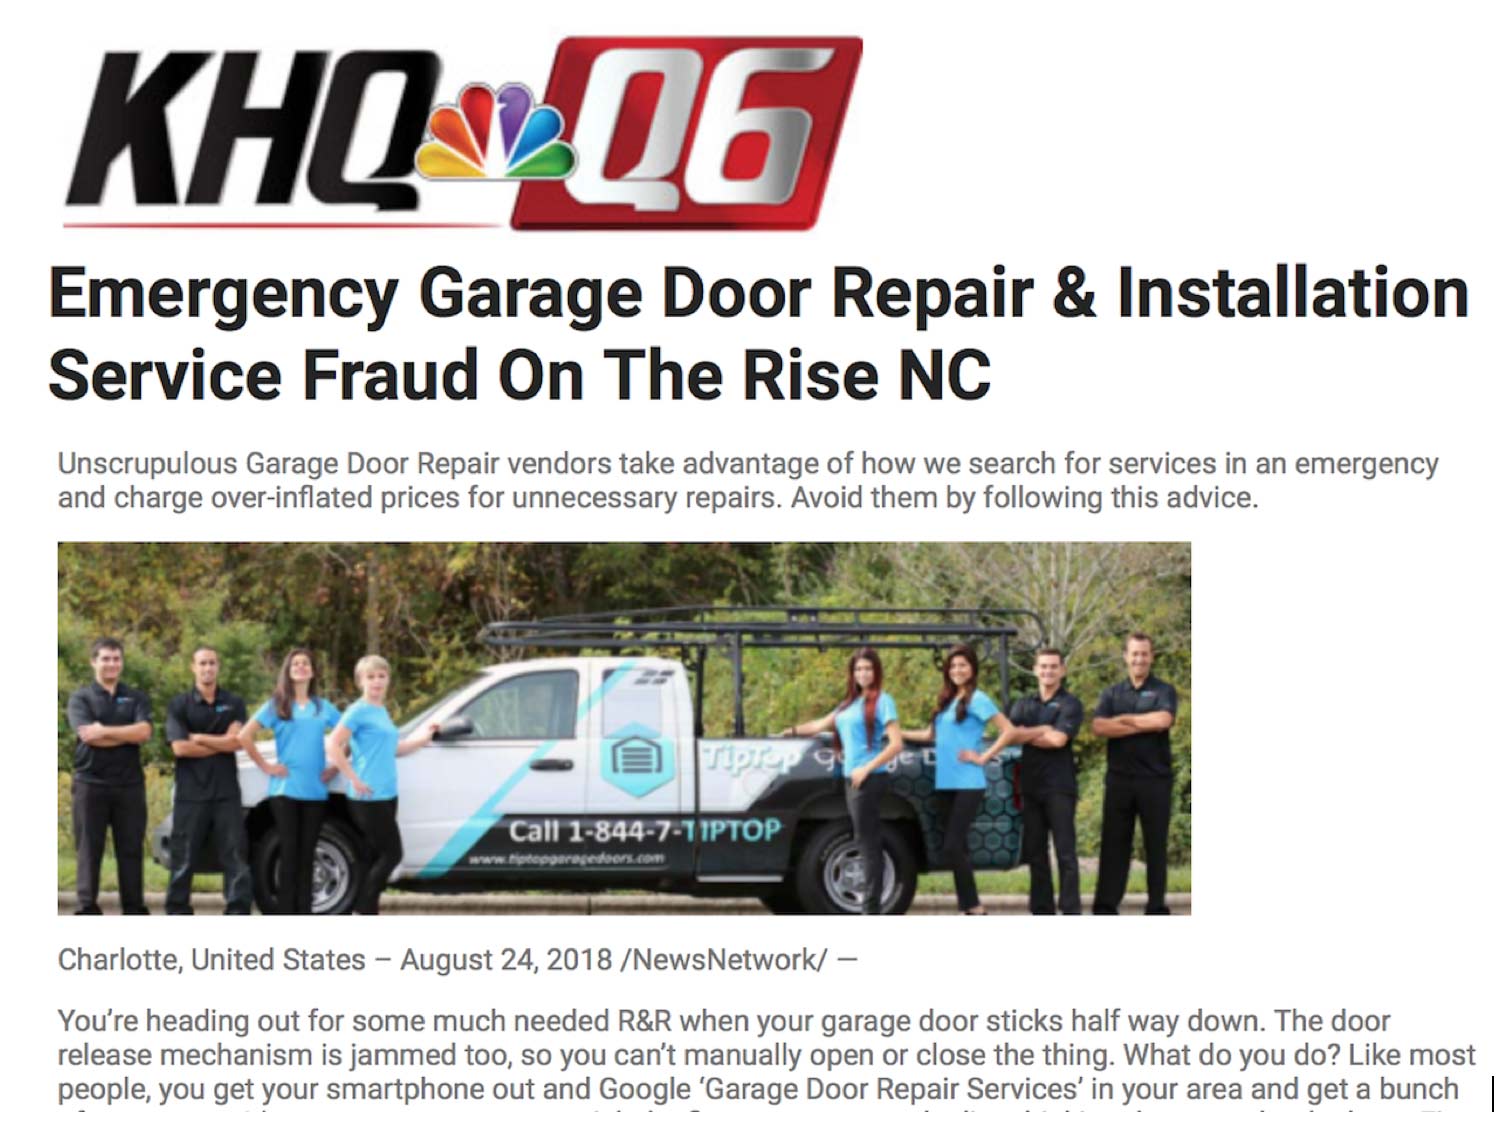 Emergency Garage Door Service Fraud on the rise in Charlotte